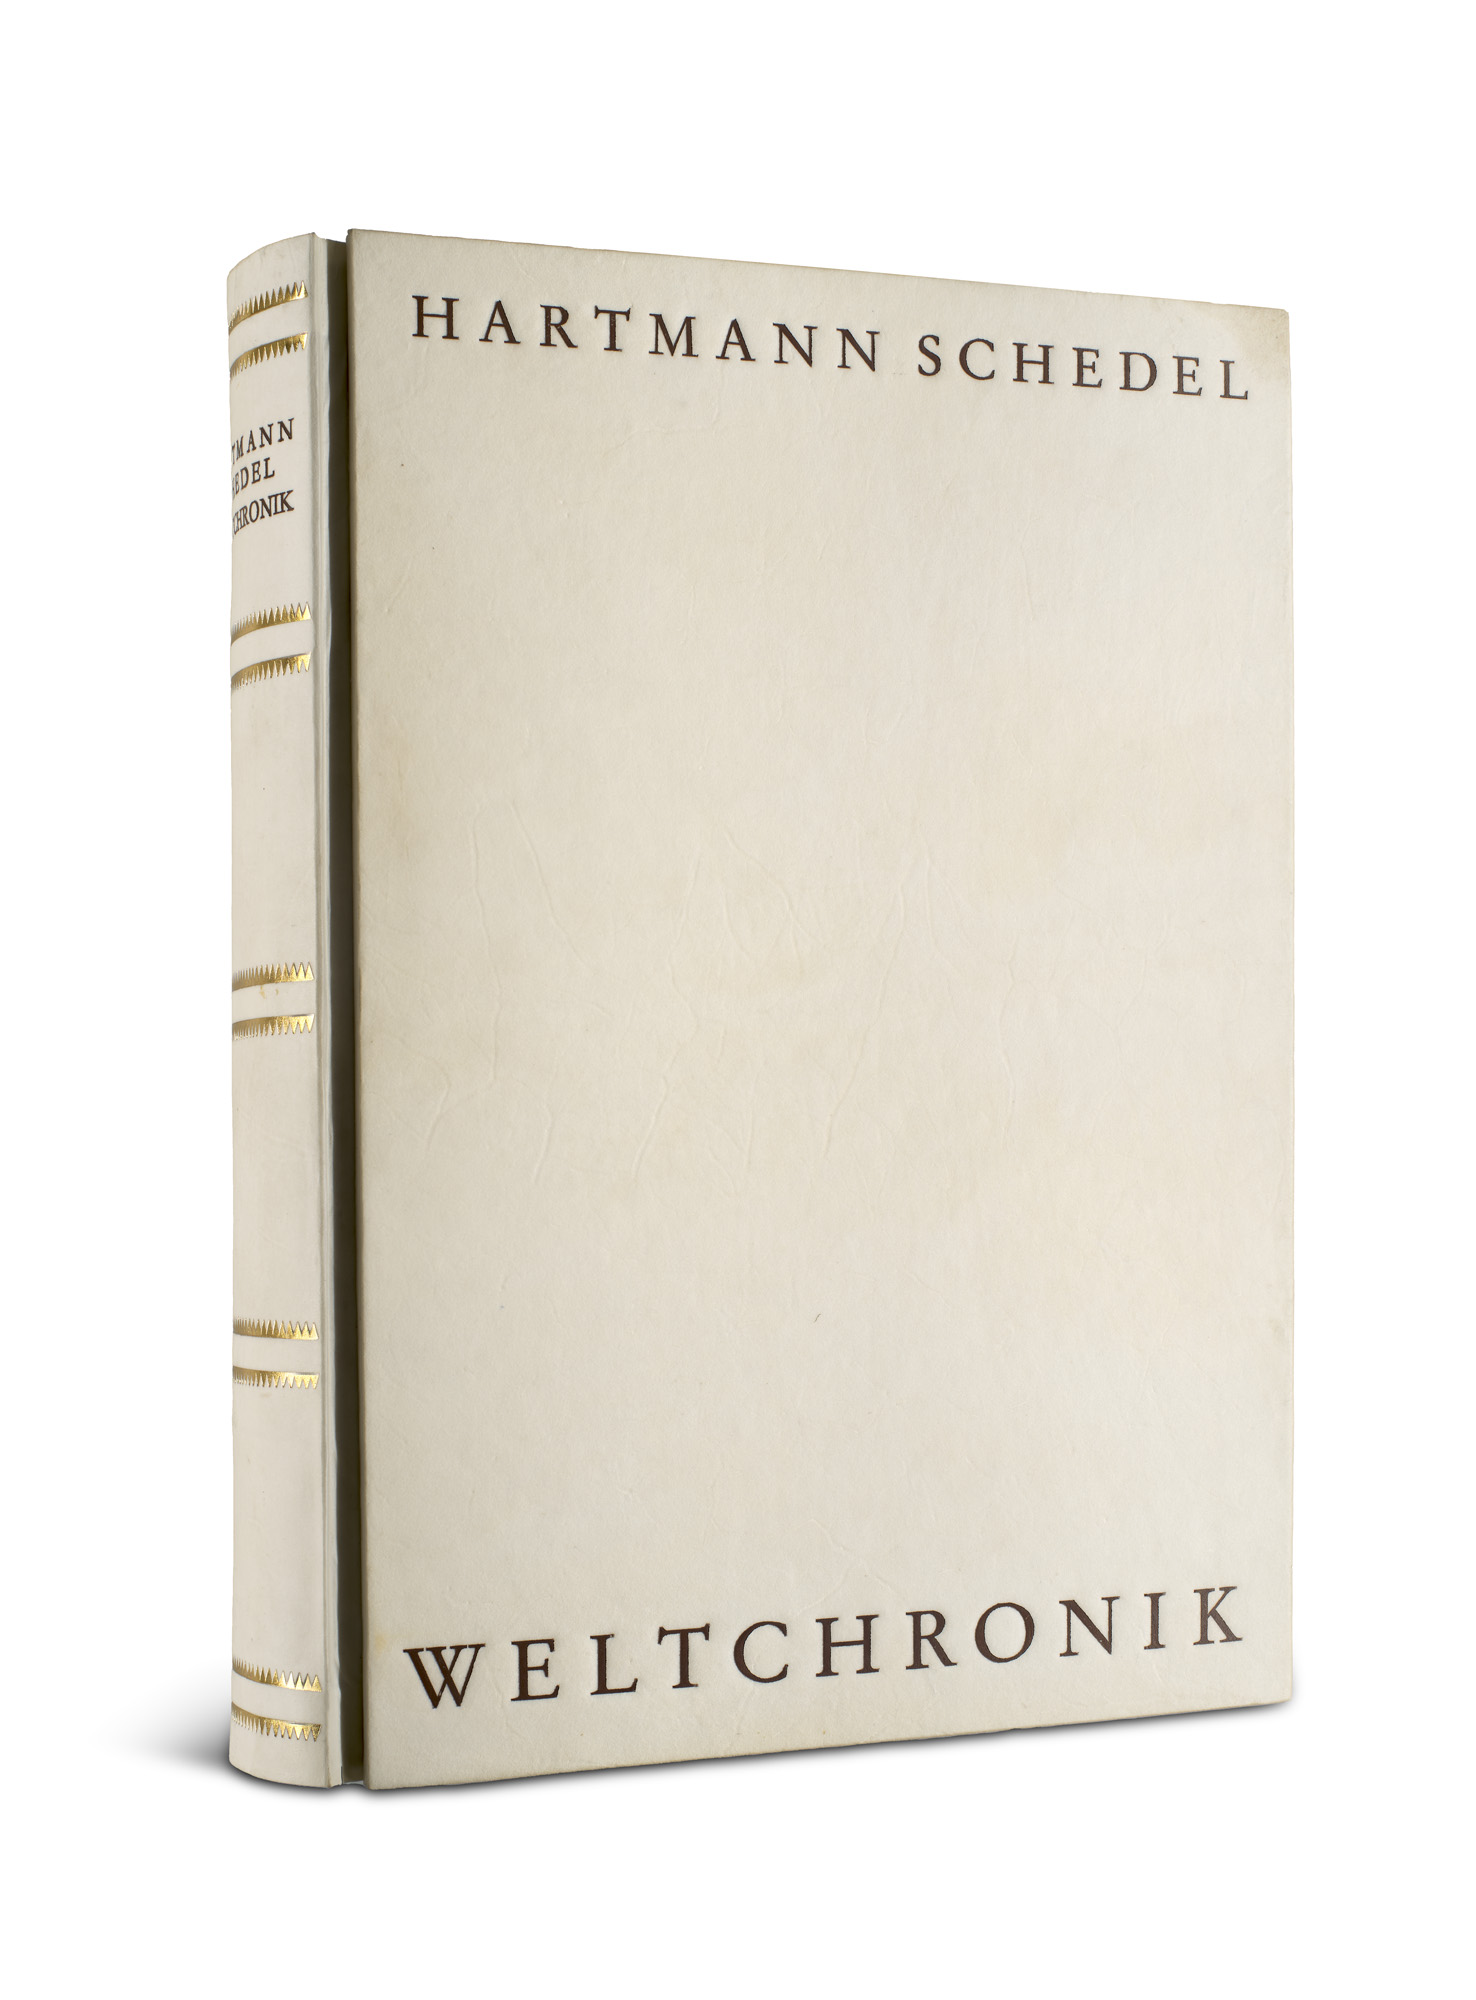 Hartmann Schedel. Weltchronik. - Image 2 of 2